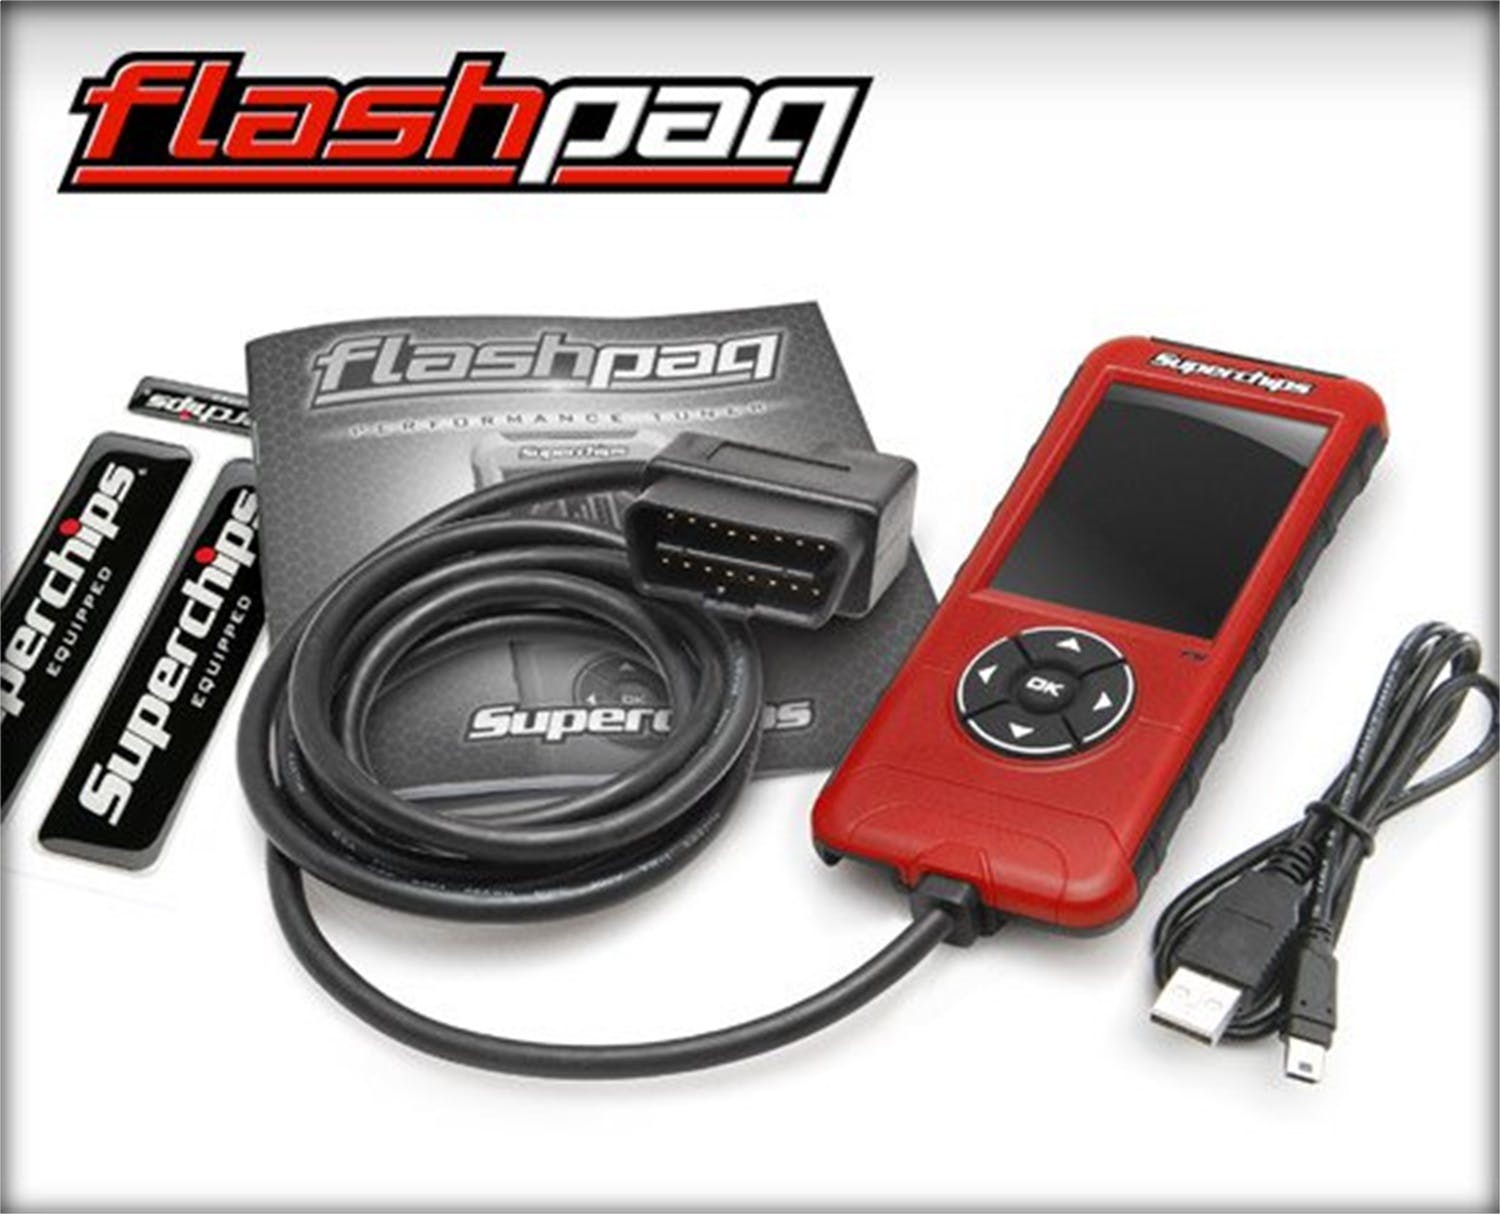 Superchips 3846 Flashpaq F5 RAM 15+ Gas